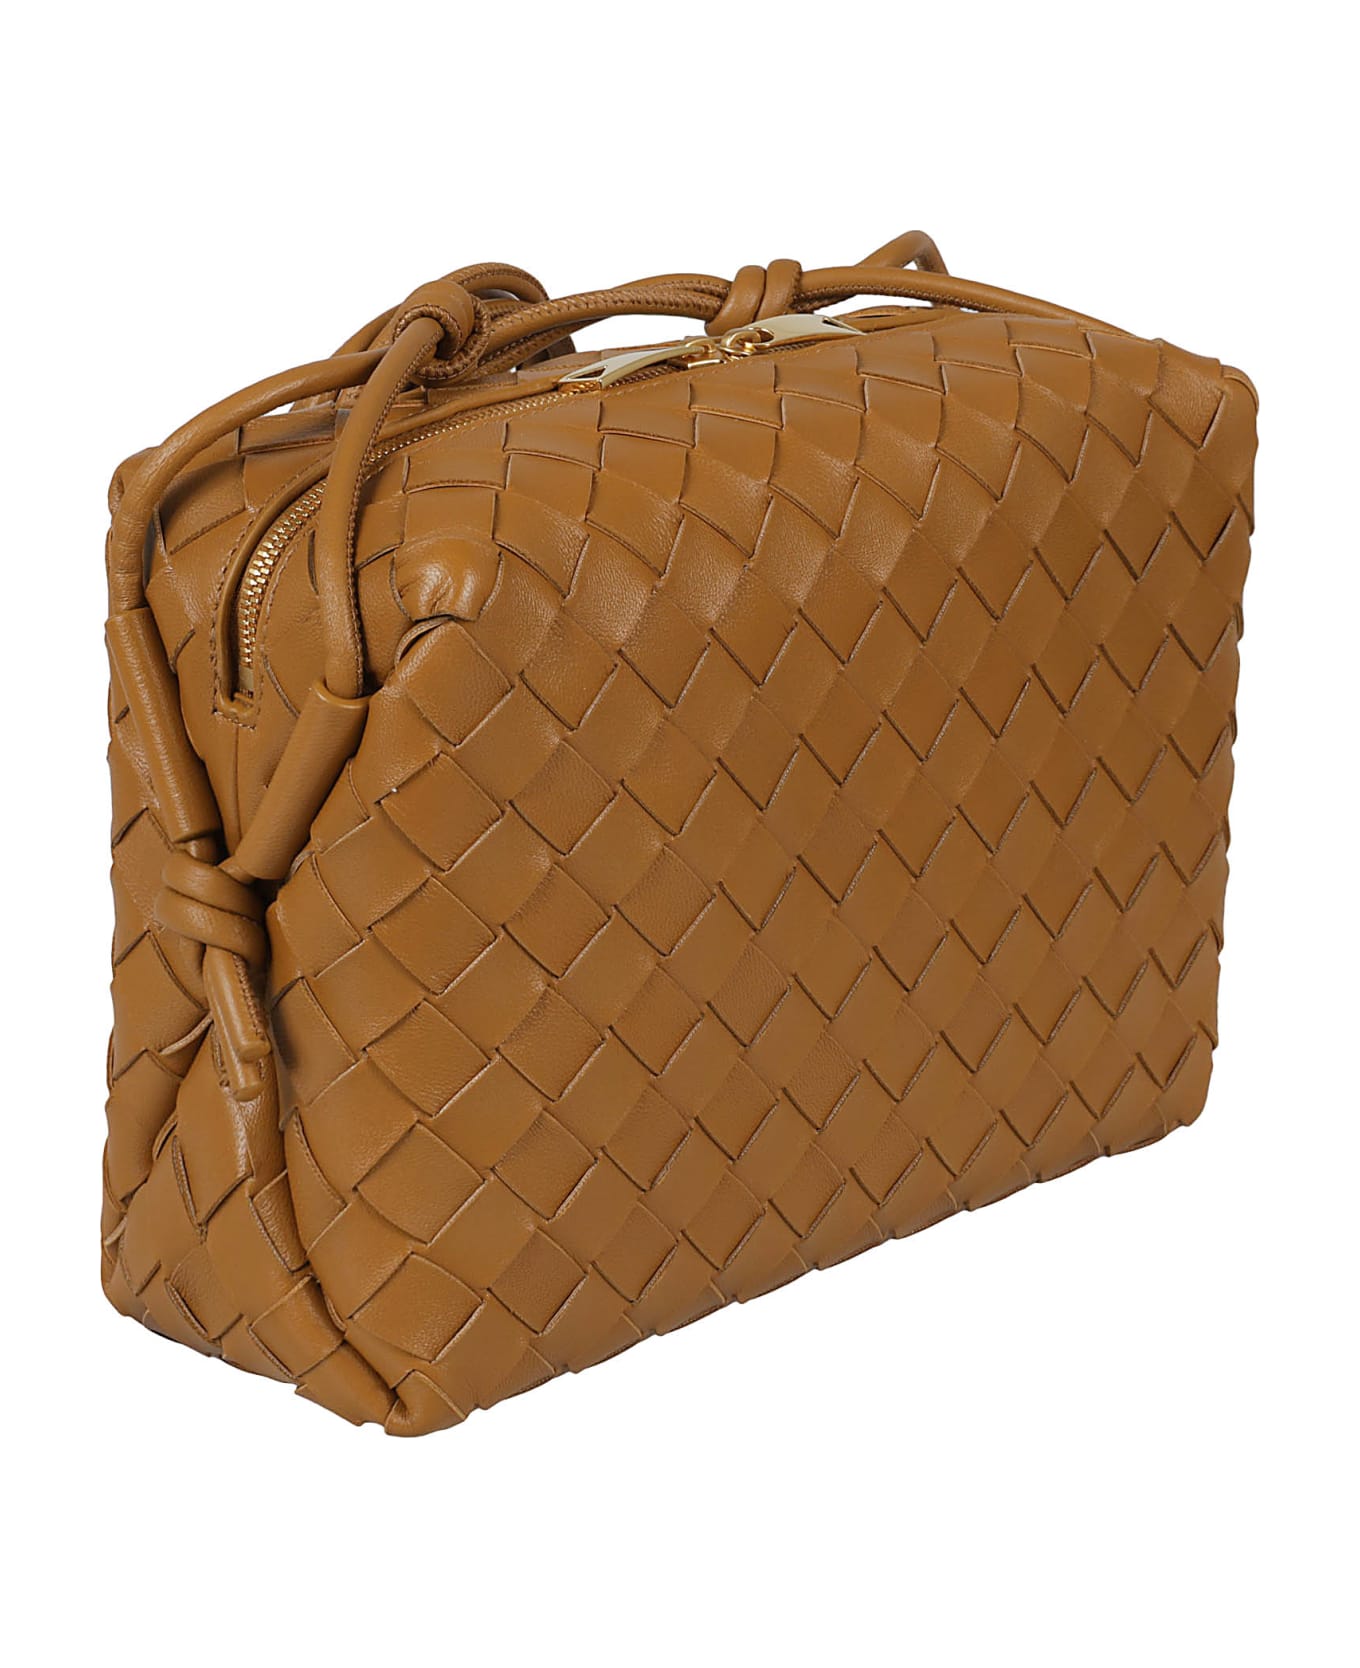 Bottega Veneta Loop Leather Shoulder Bag - Gold